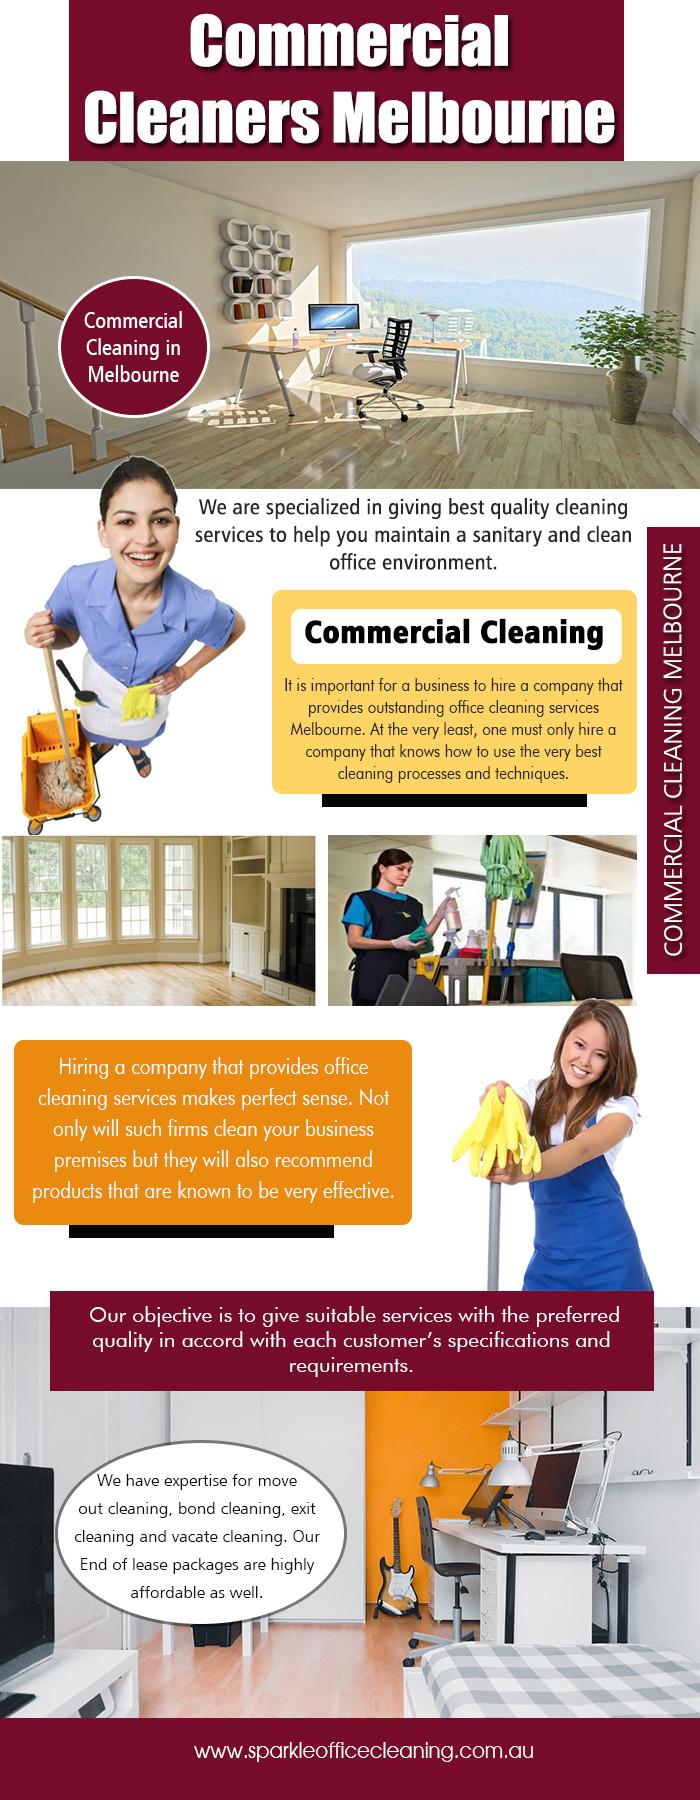 Commercial Cleaners Melbourne | sparkleofficecleaning.com.au